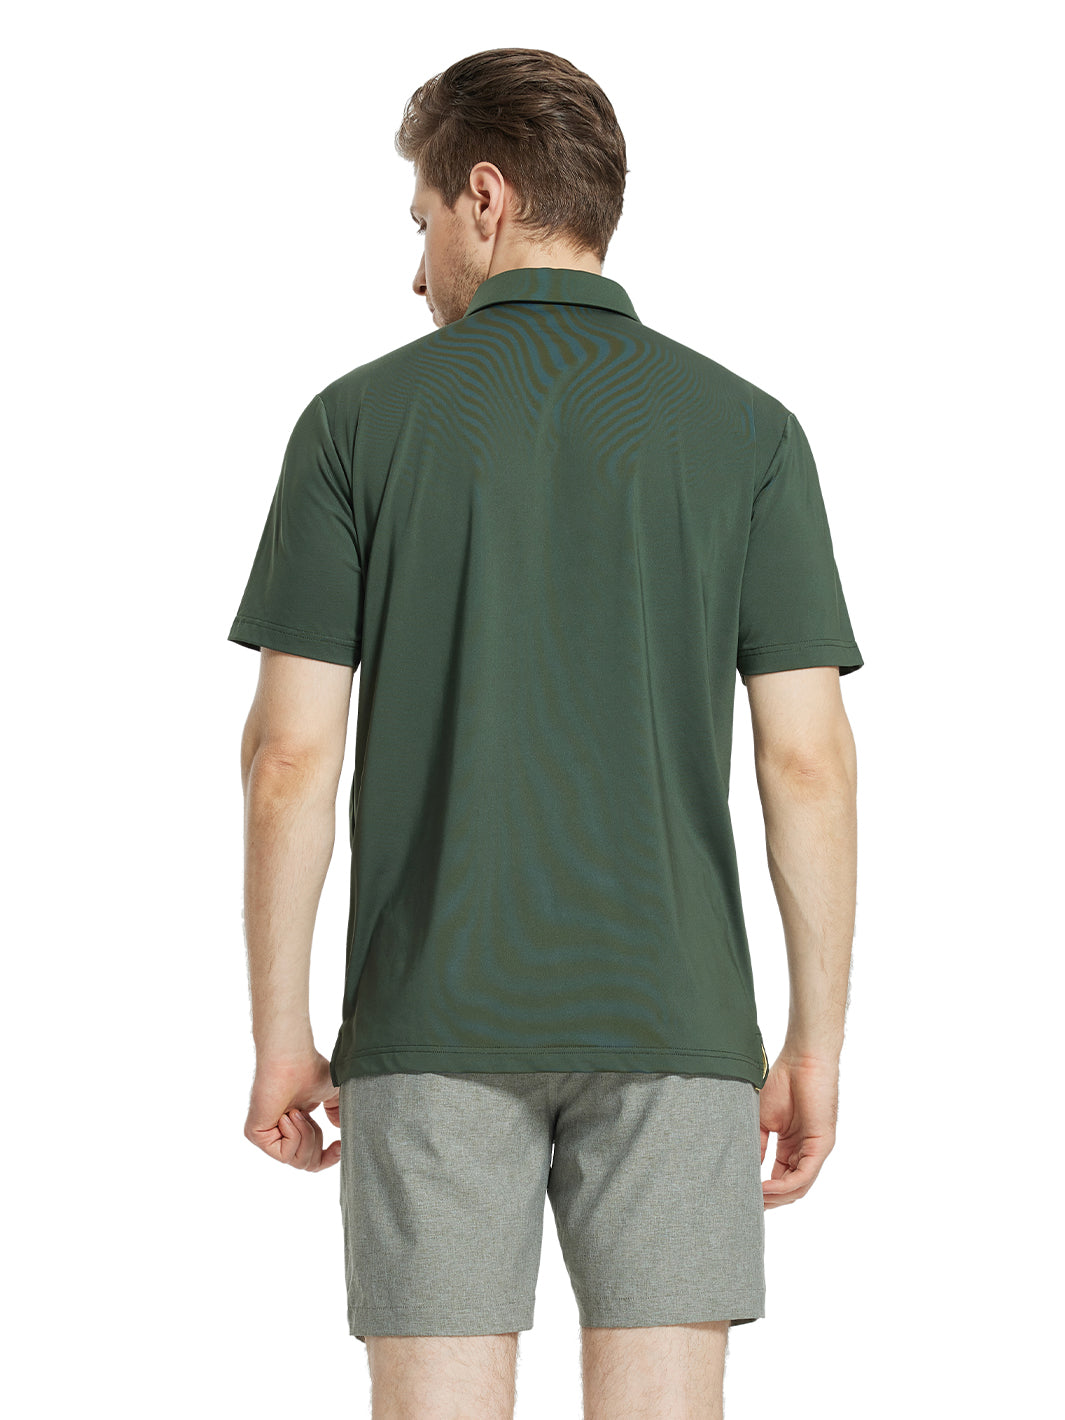 Men's Chest Print Golf Polo Shirts-Olive Green